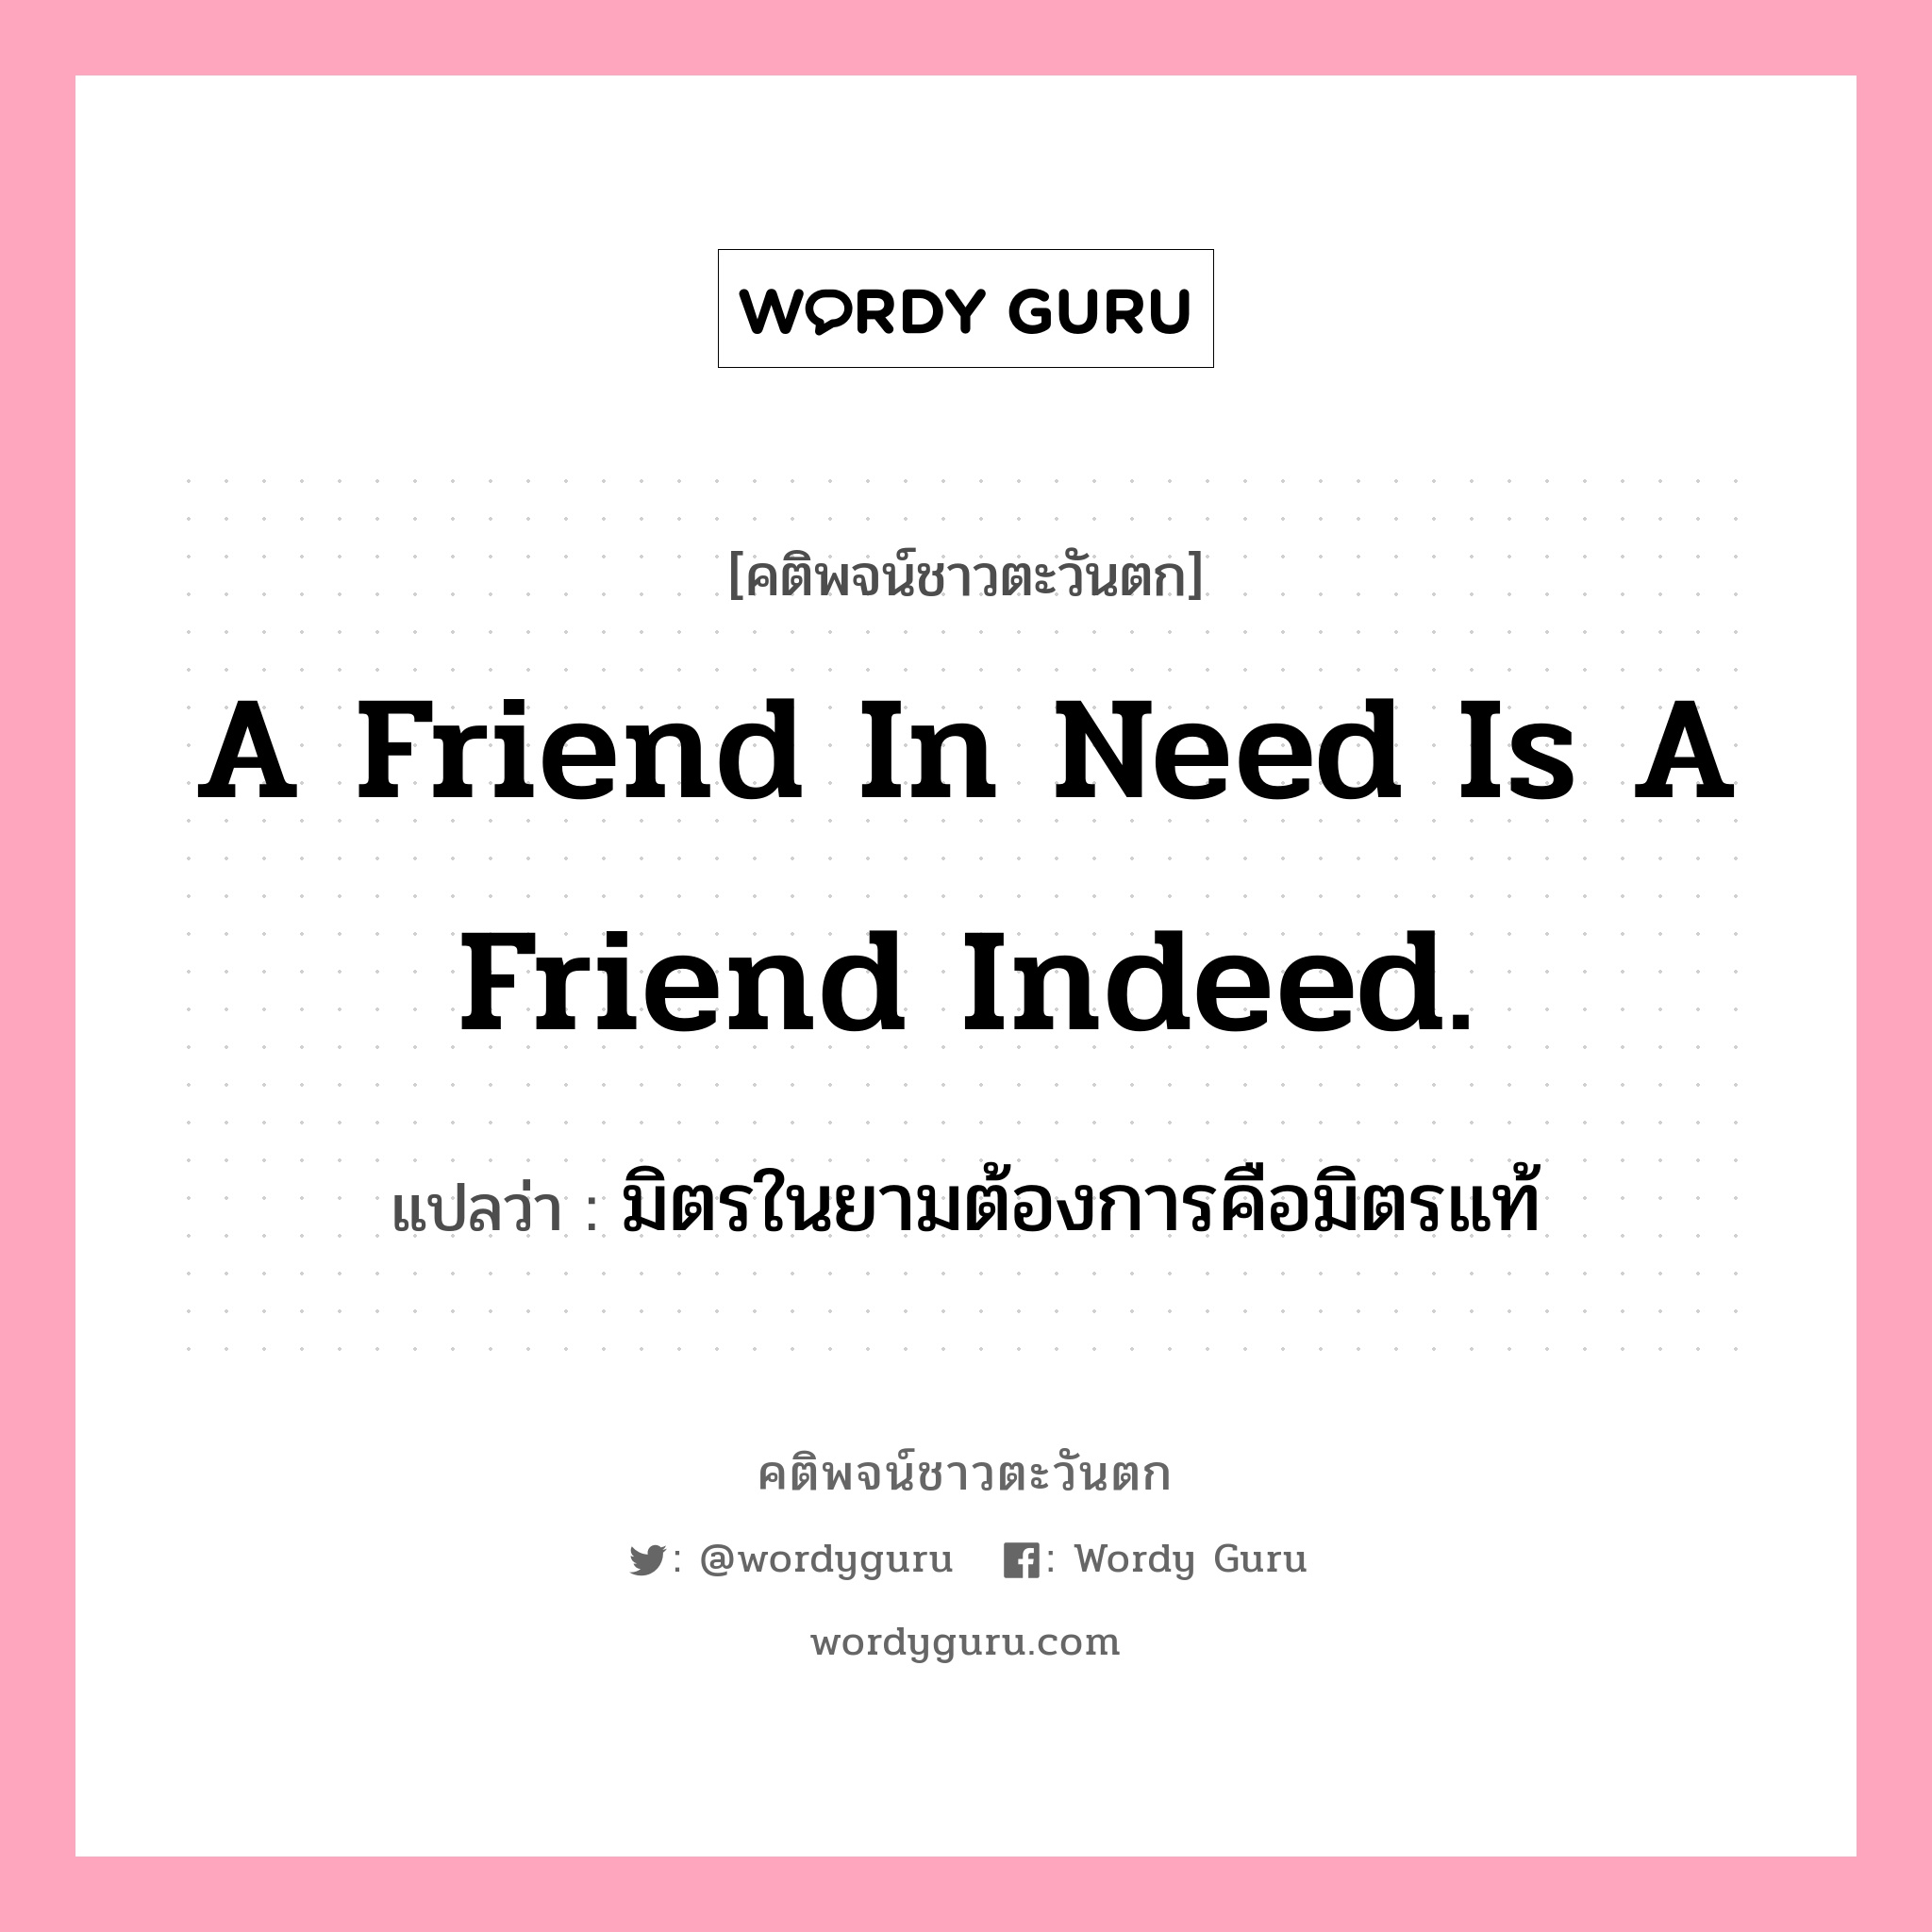 A friend in need is a friend indeed., คติพจน์ชาวตะวันตก A friend in need is a friend indeed. แปลว่า มิตรในยามต้องการคือมิตรแท้